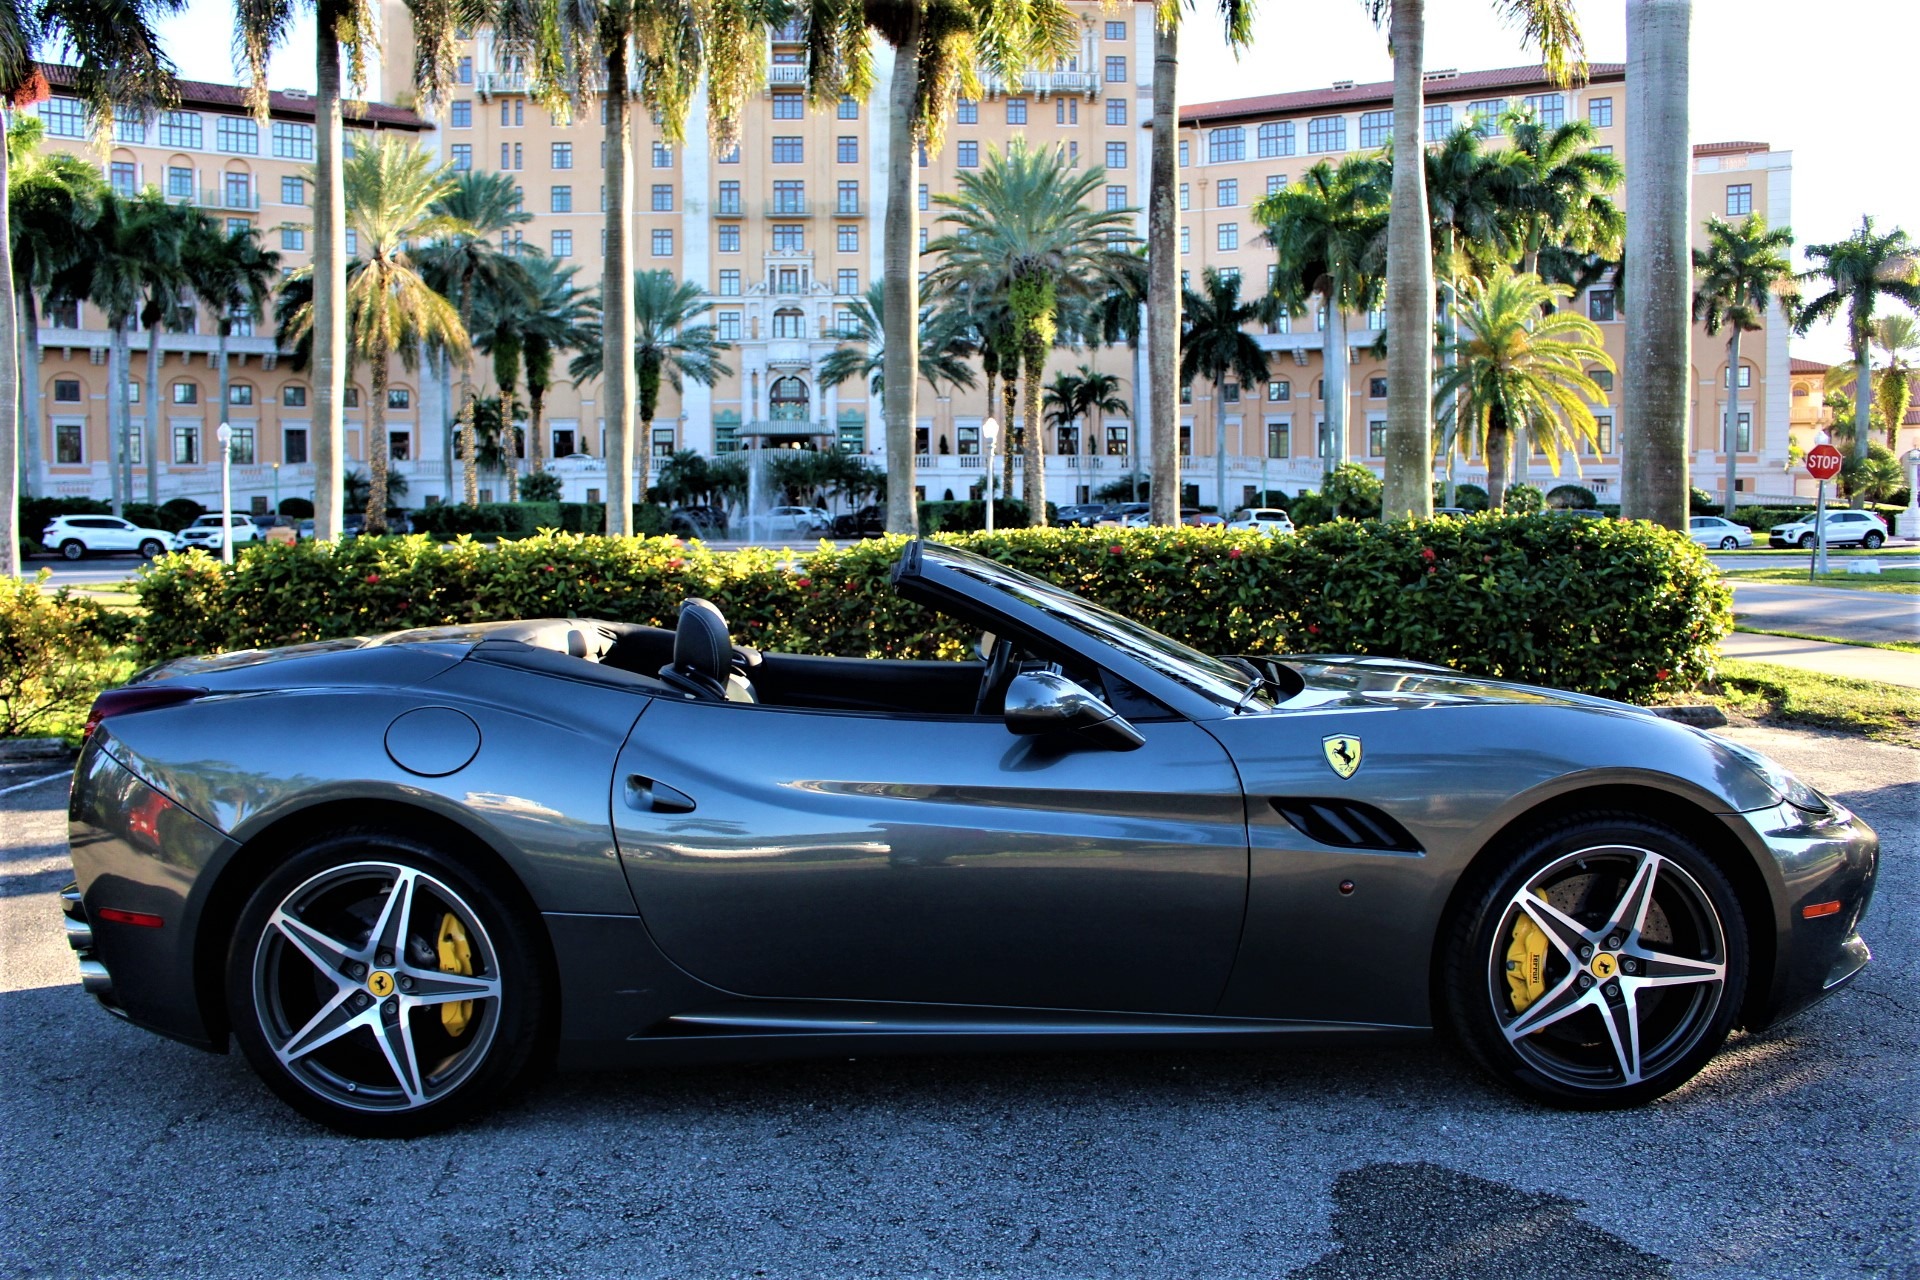 Used 2011 Ferrari California for sale $105,850 at The Gables Sports Cars in Miami FL 33146 1